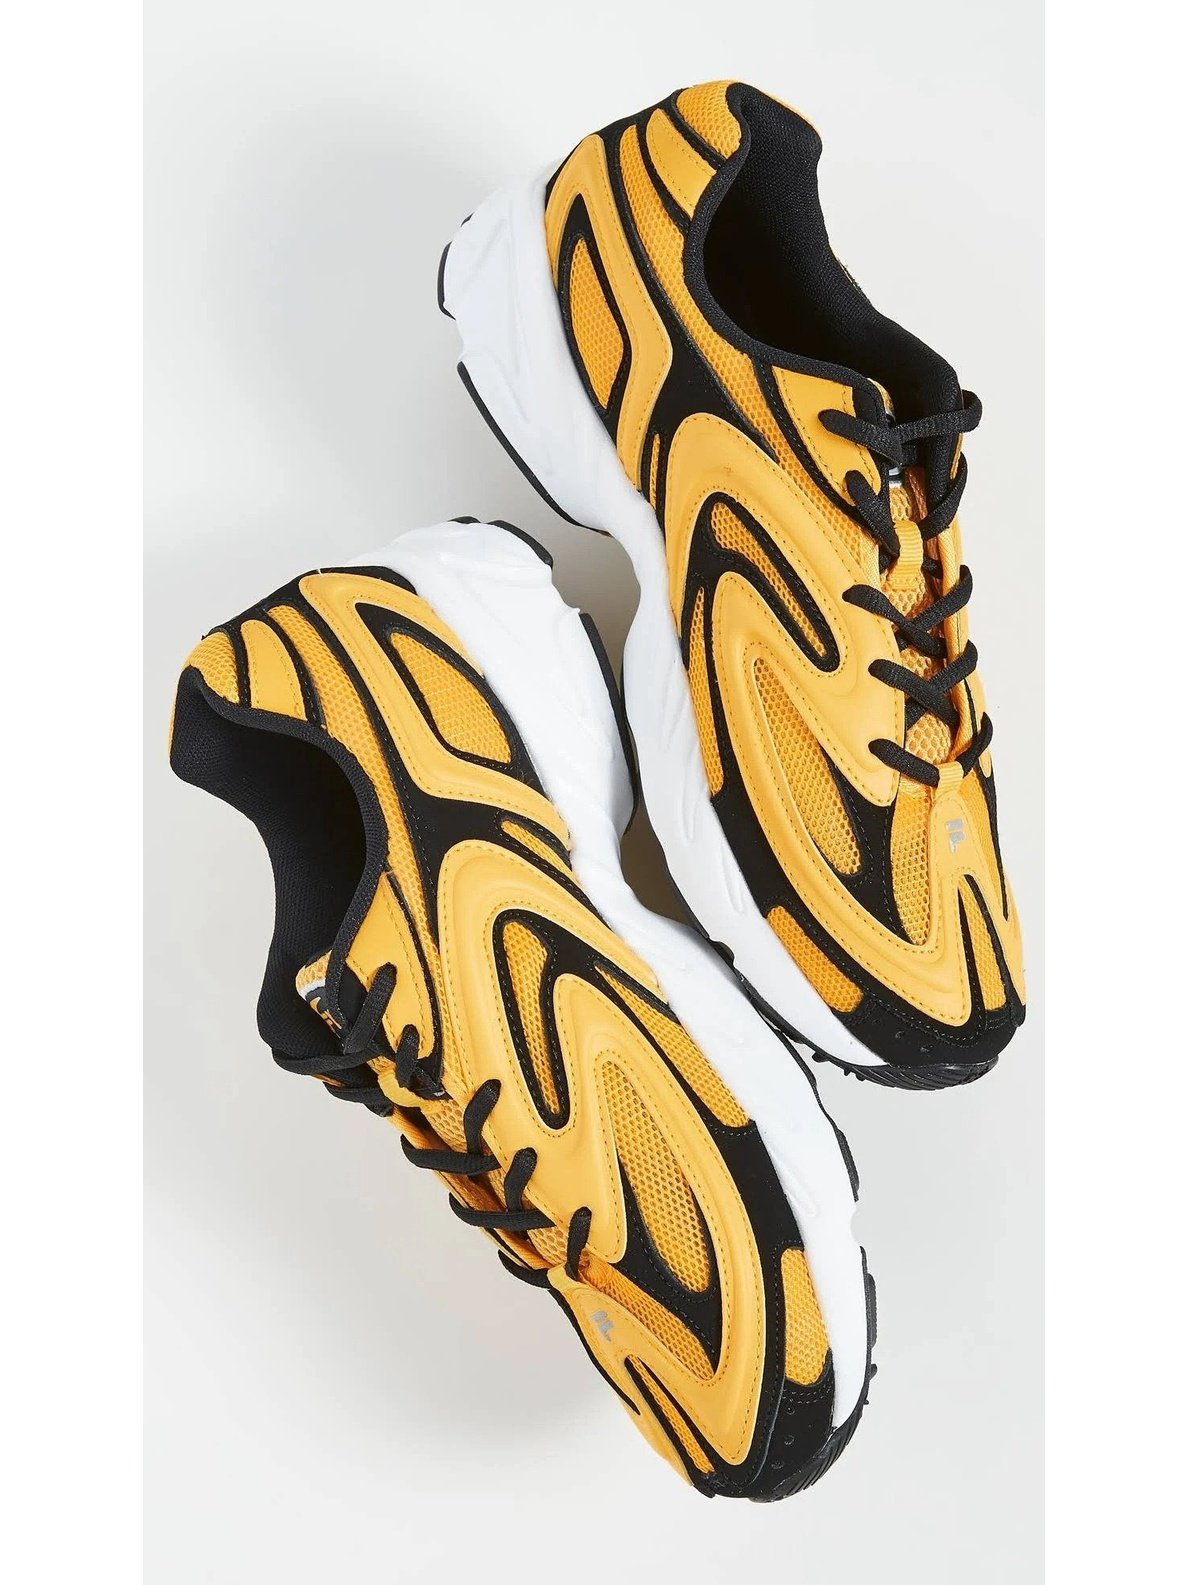 Fila Men's Creator Sneakers 702 Gold/Black/White 1RM00785-702.